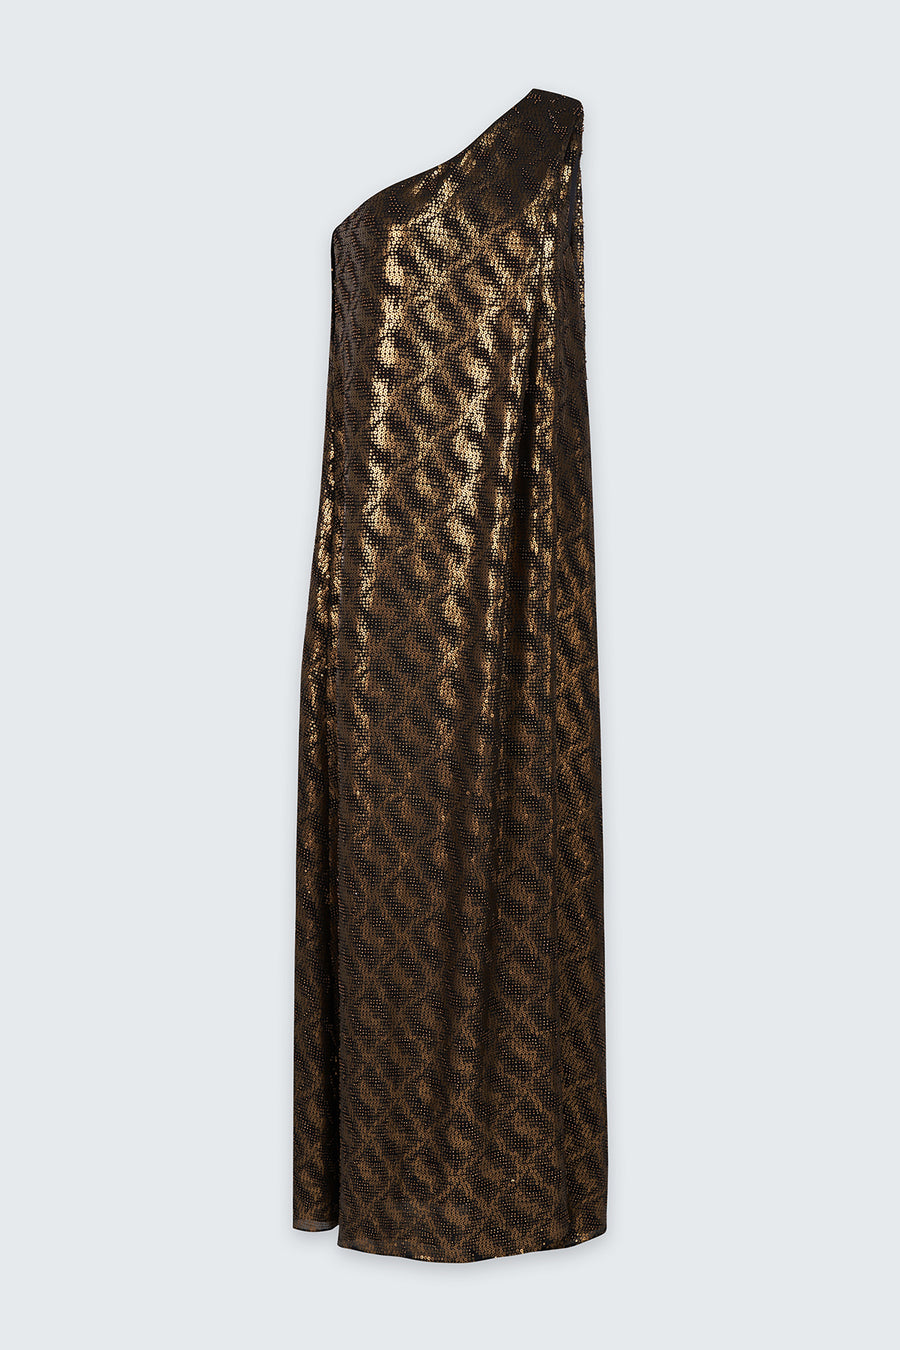 Lexa Gown In Sequin Chiffon